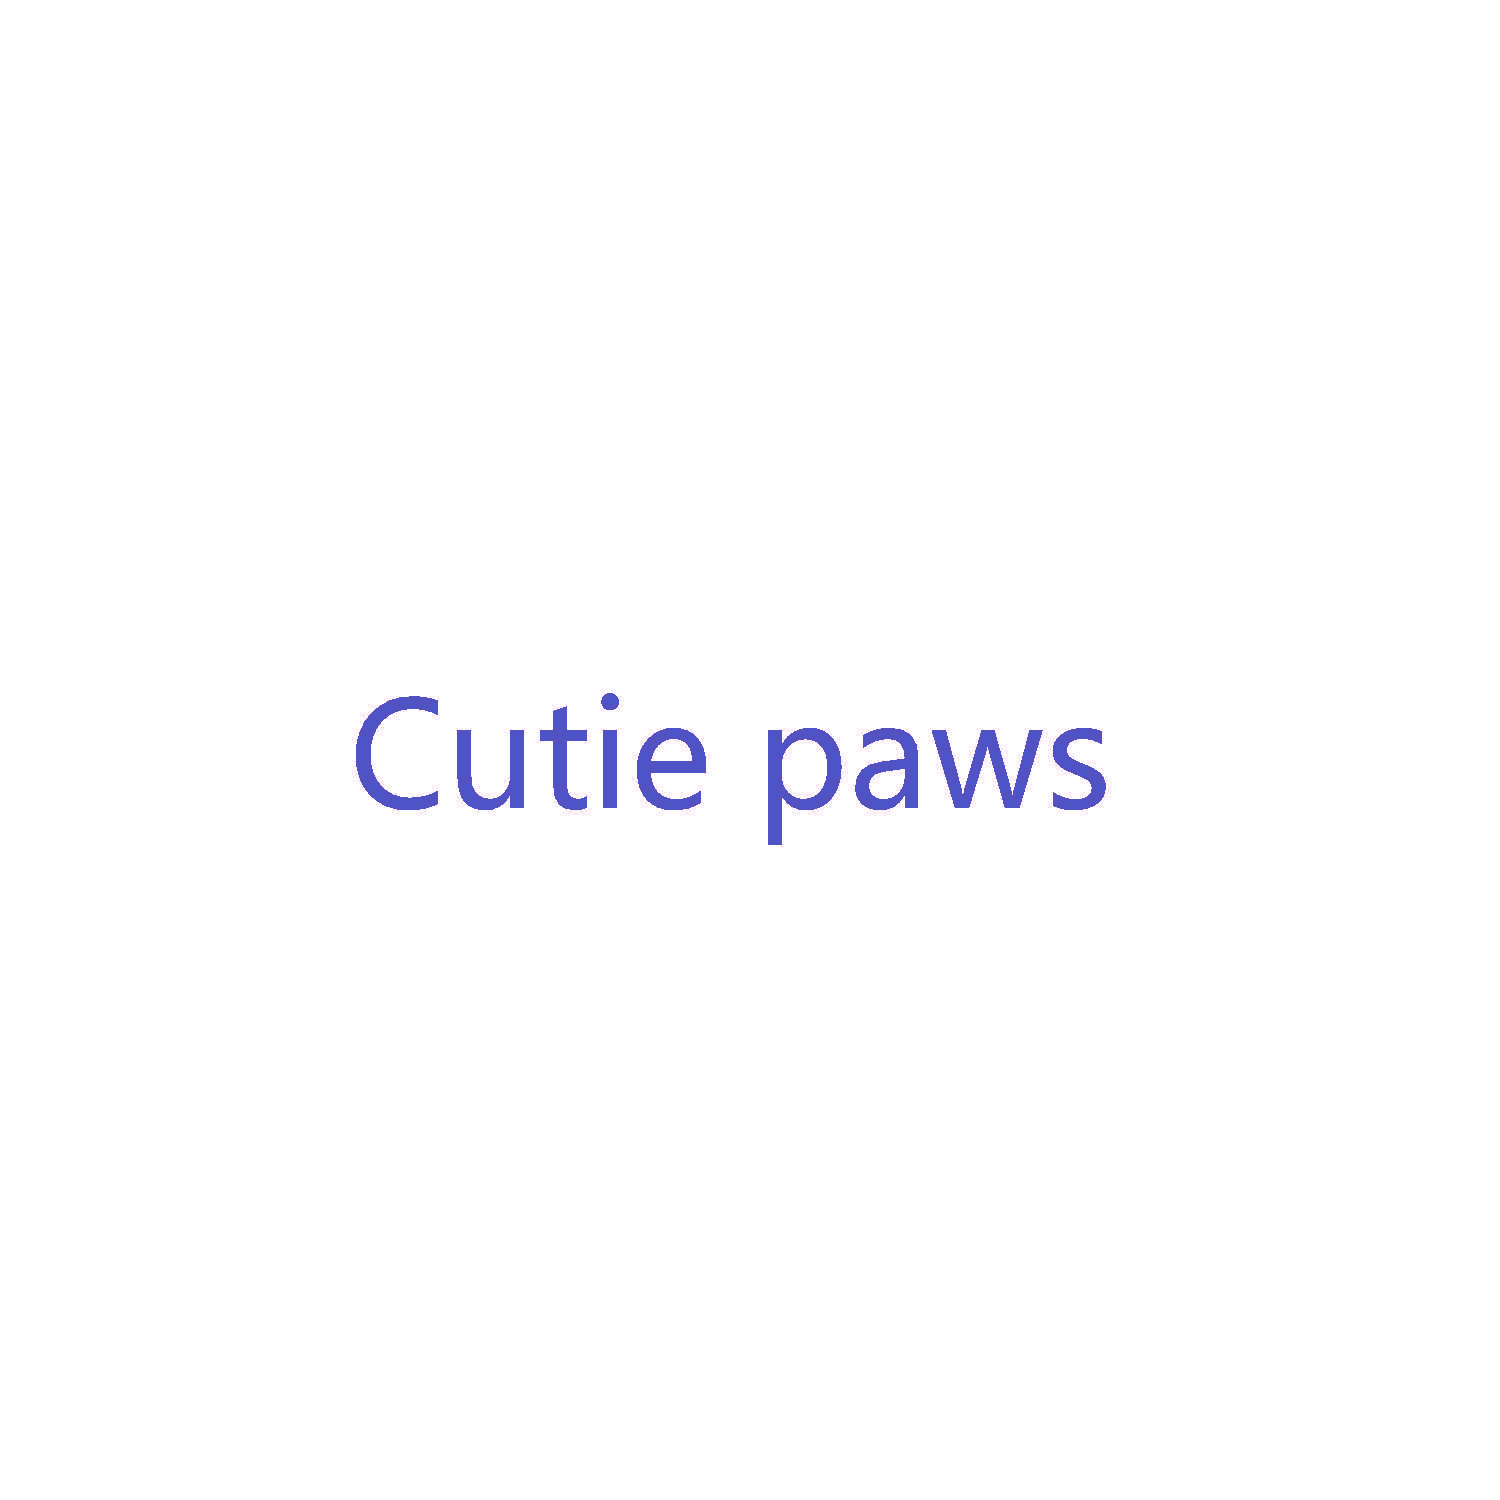 Cutie paws